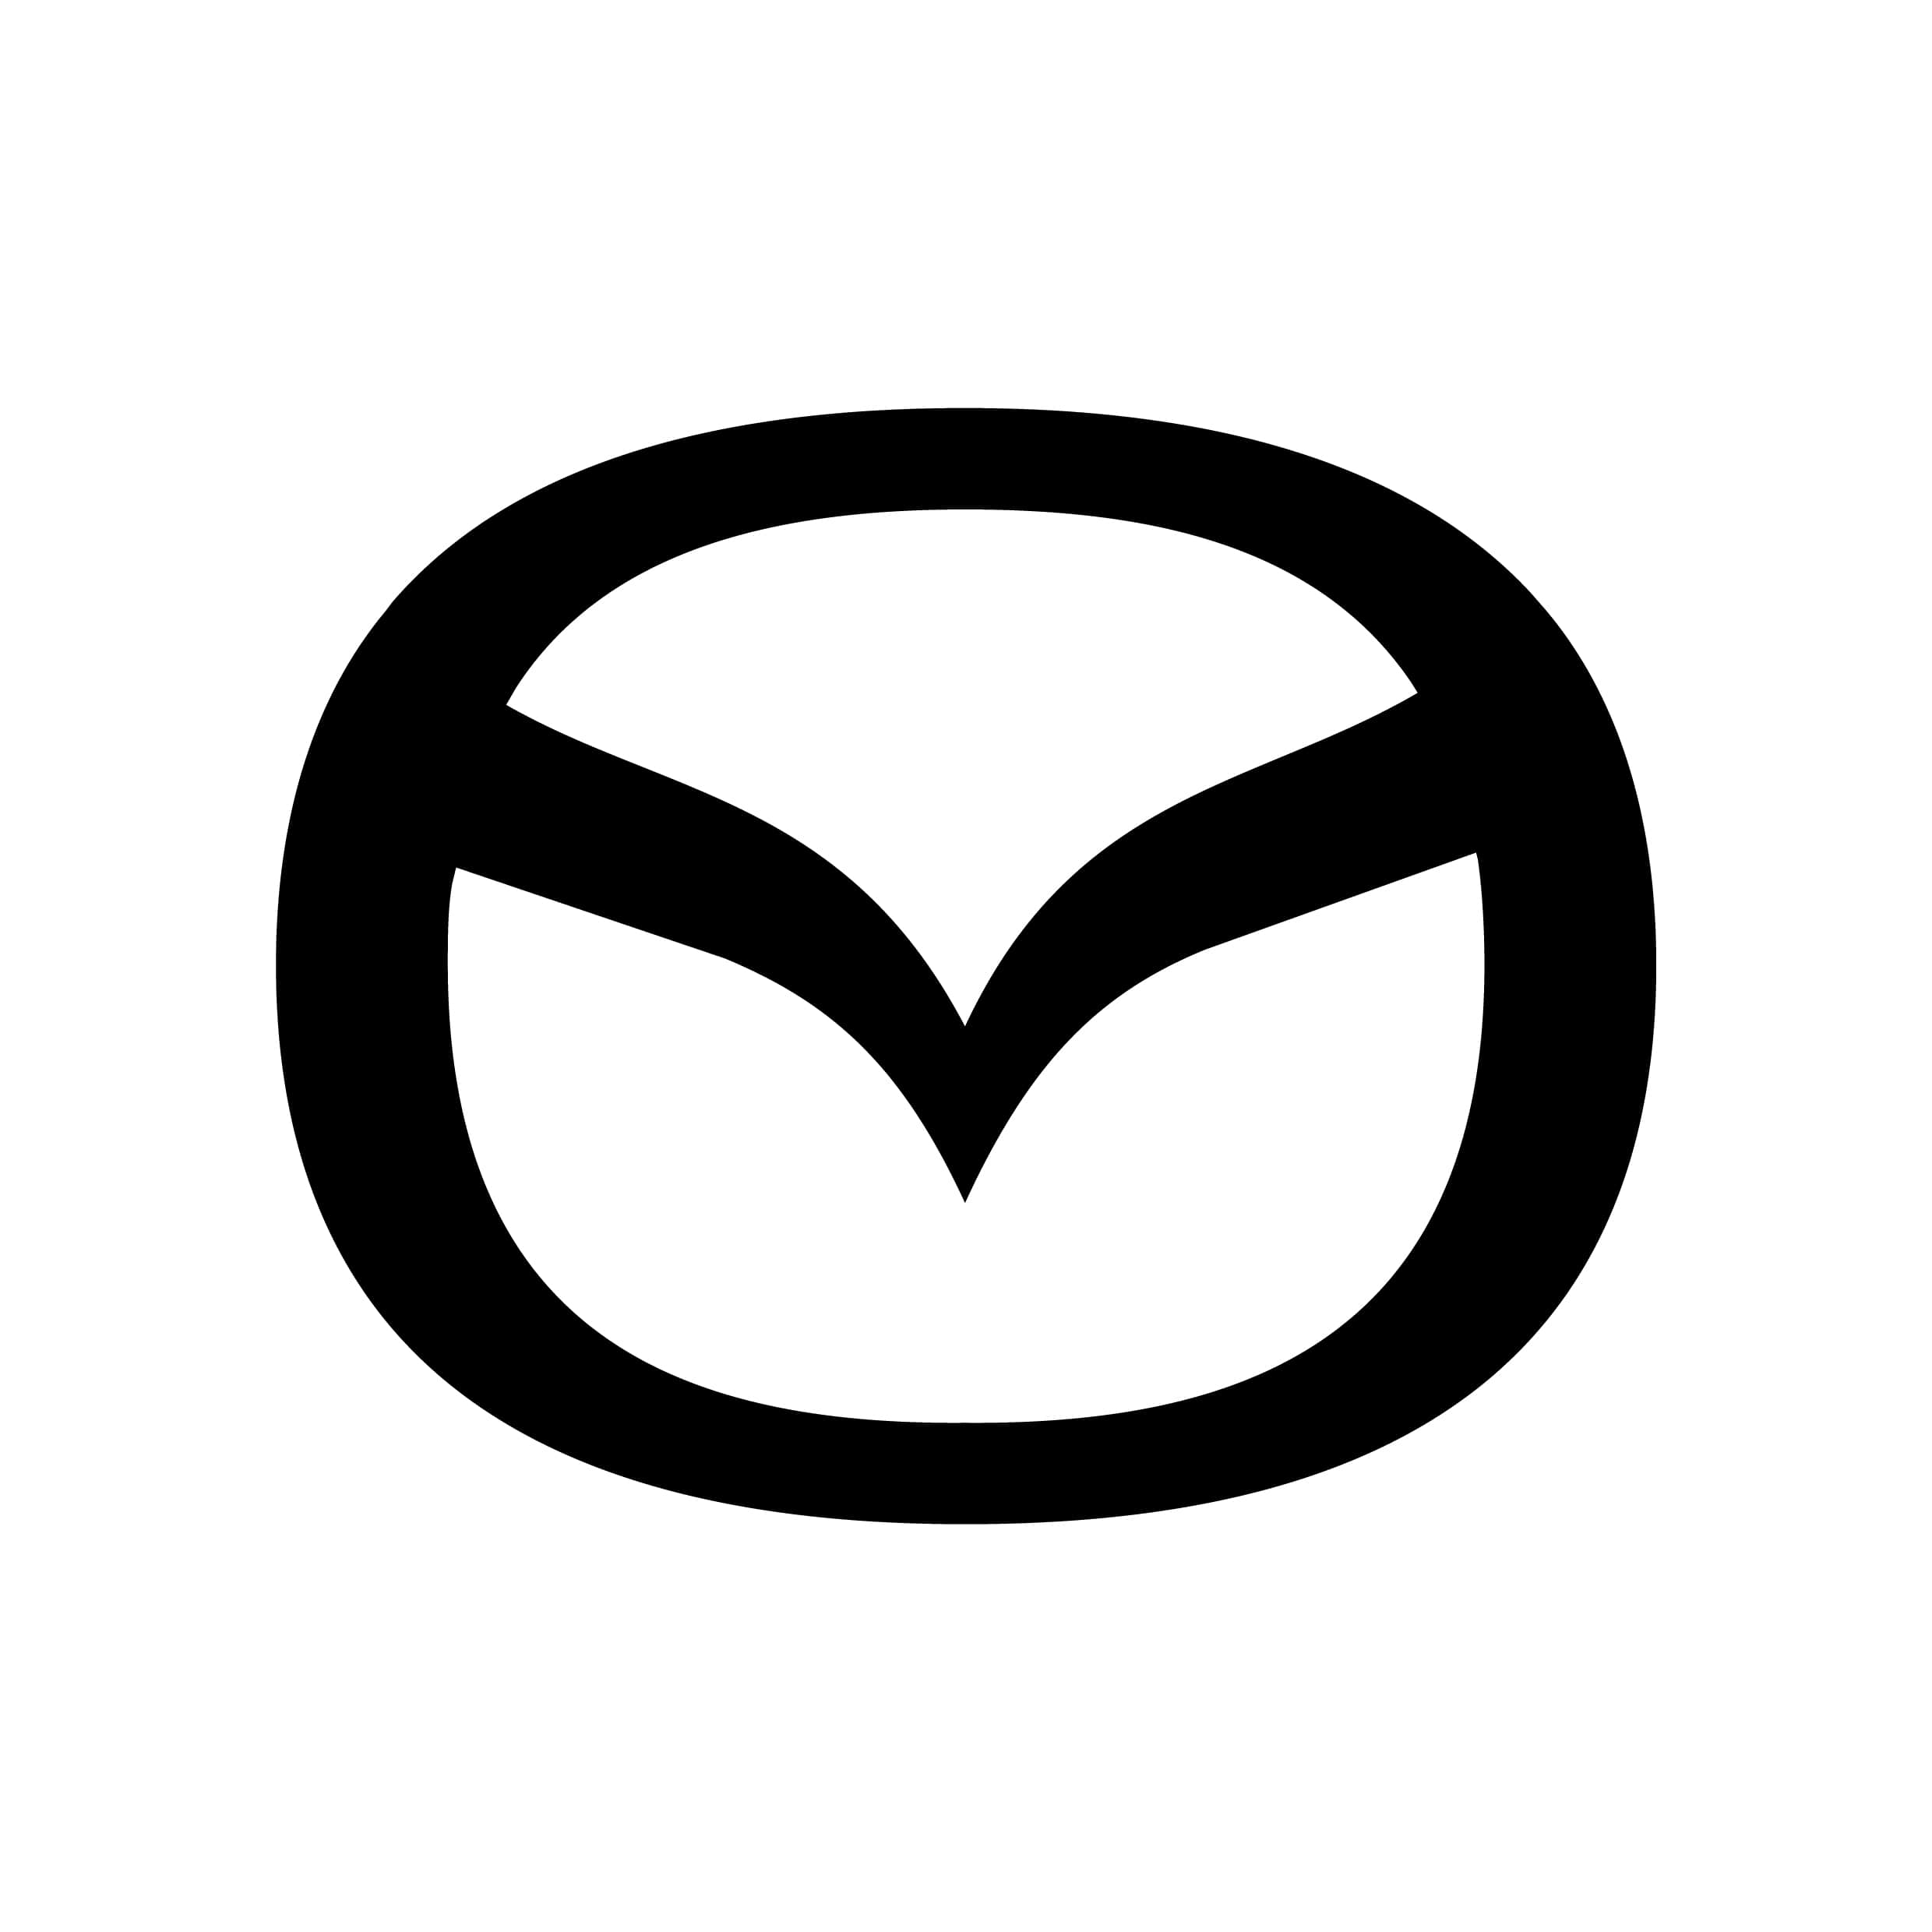 stickers-mazda-ref8-autocollant-voiture-sticker-auto-autocollants-decals-sponsors-racing-tuning-sport-logo-min